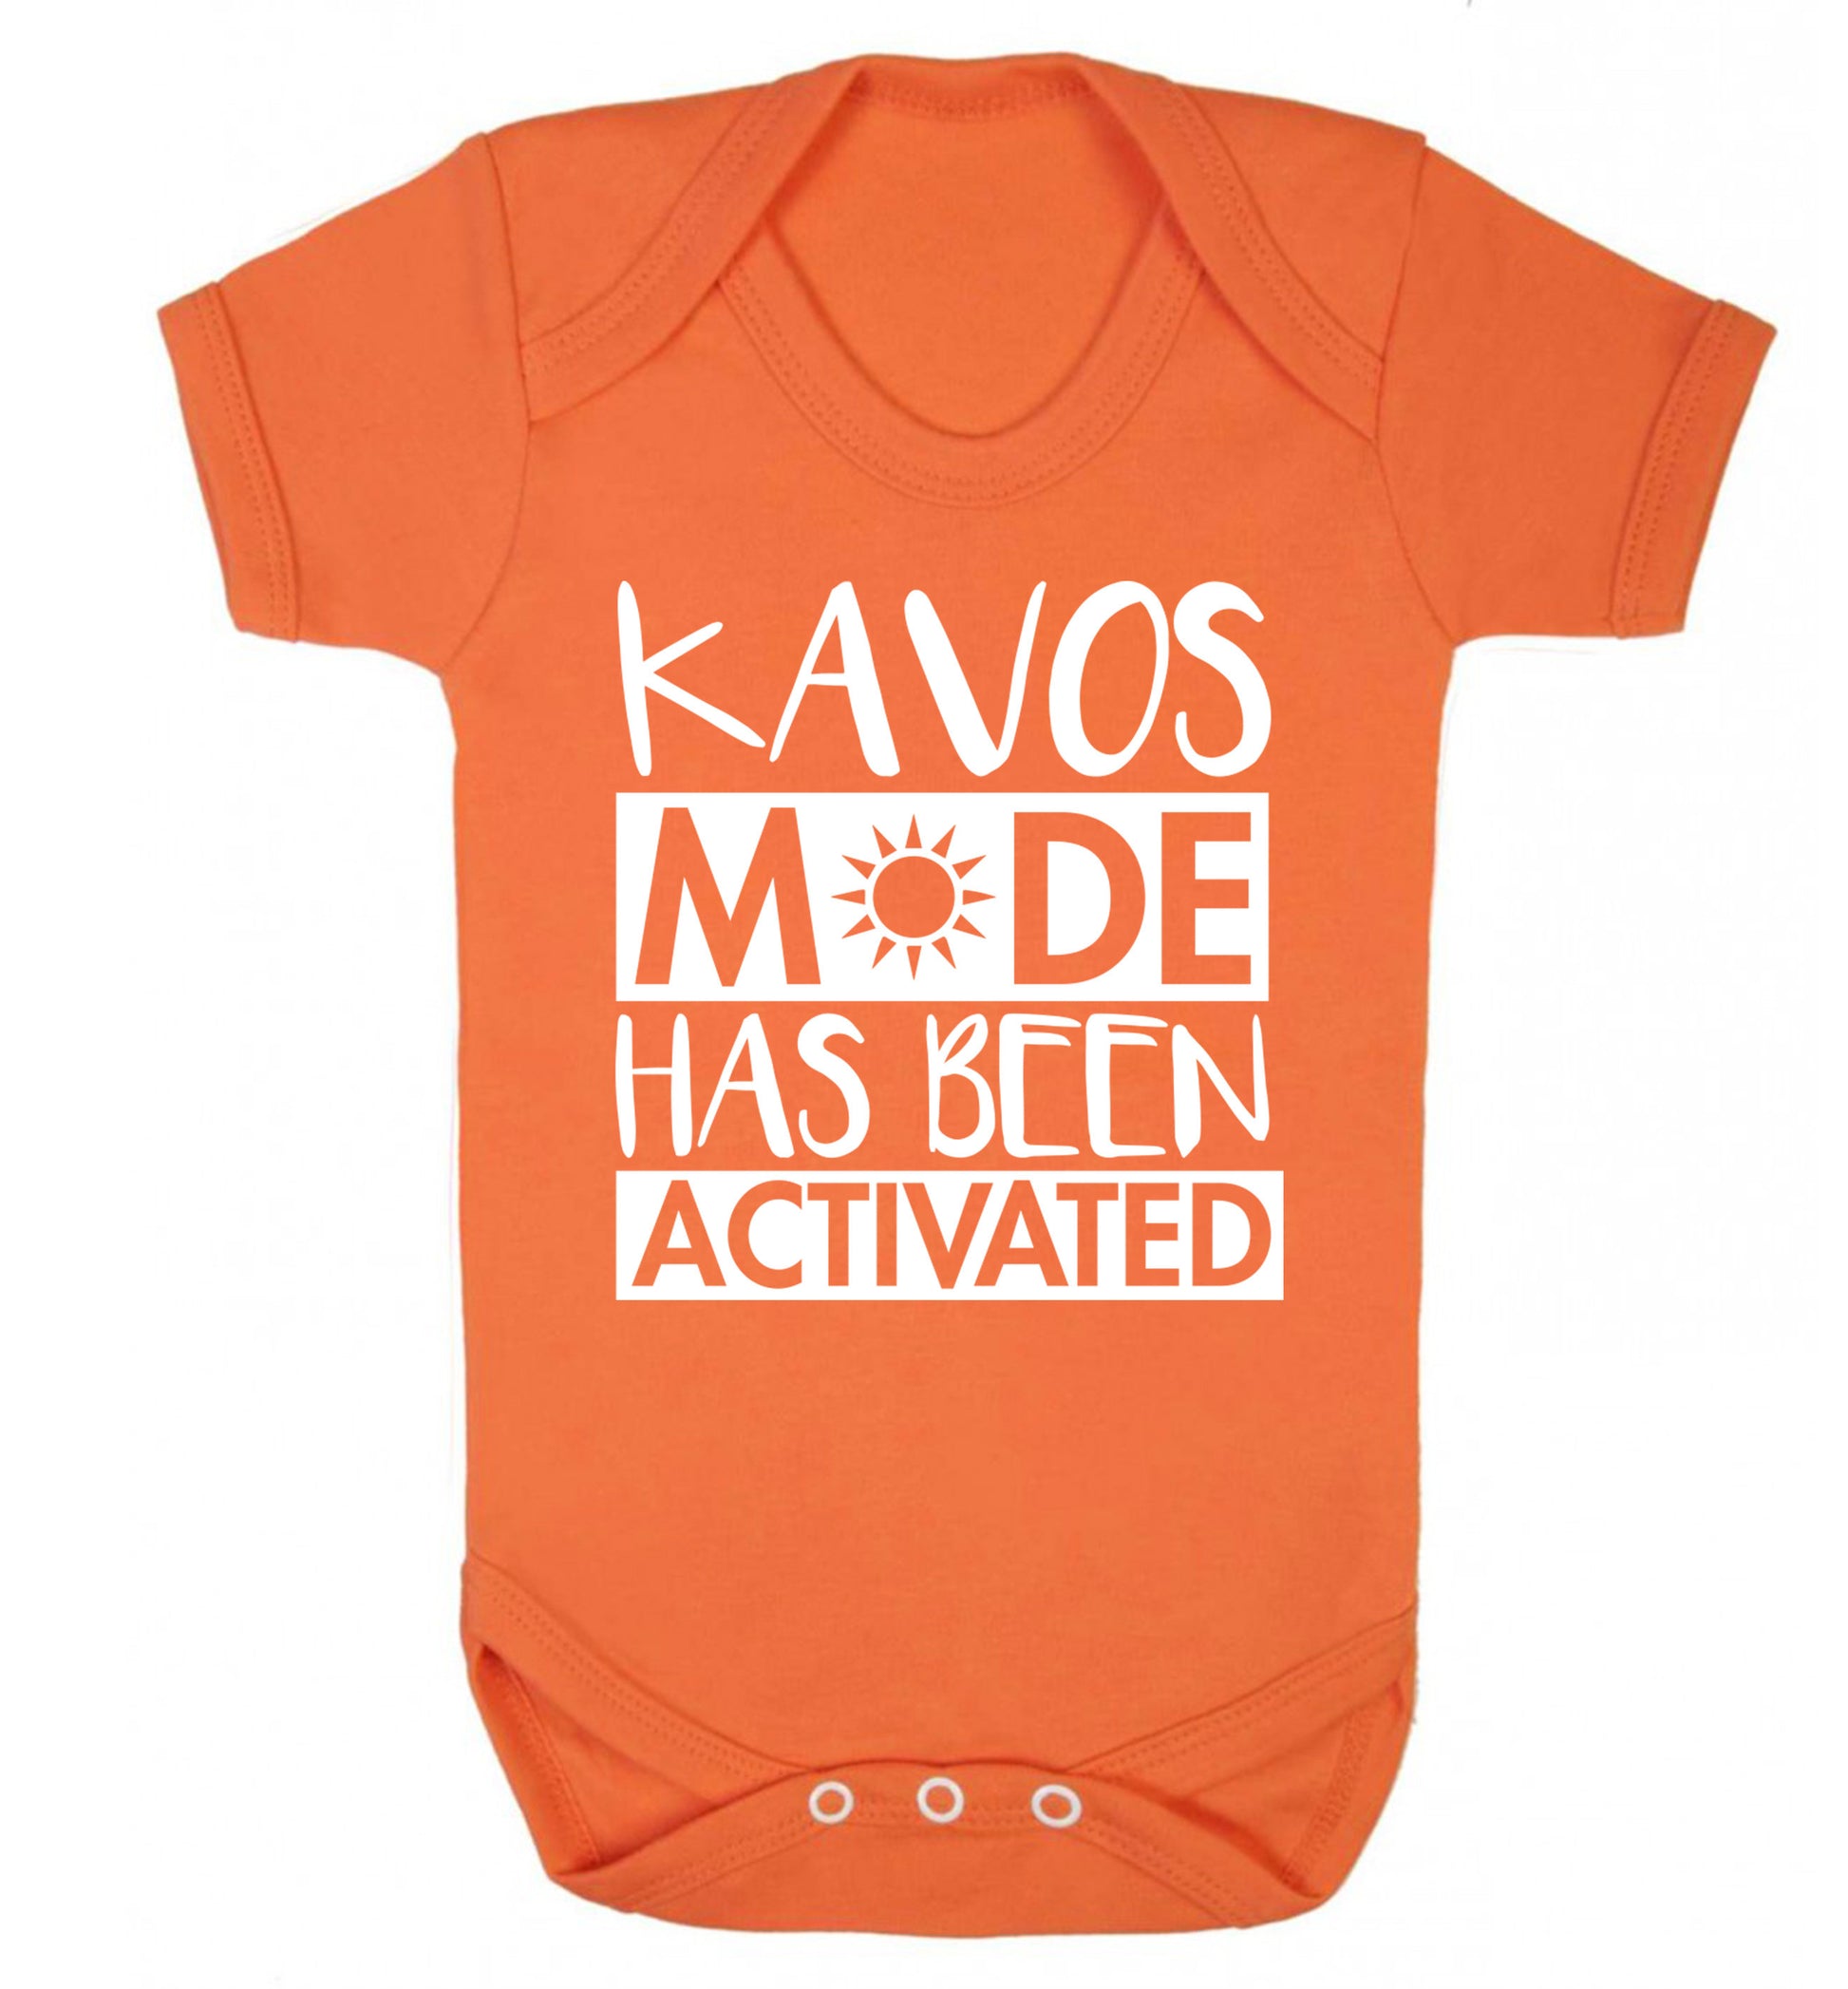 Kavos mode has been activated Baby Vest orange 18-24 months